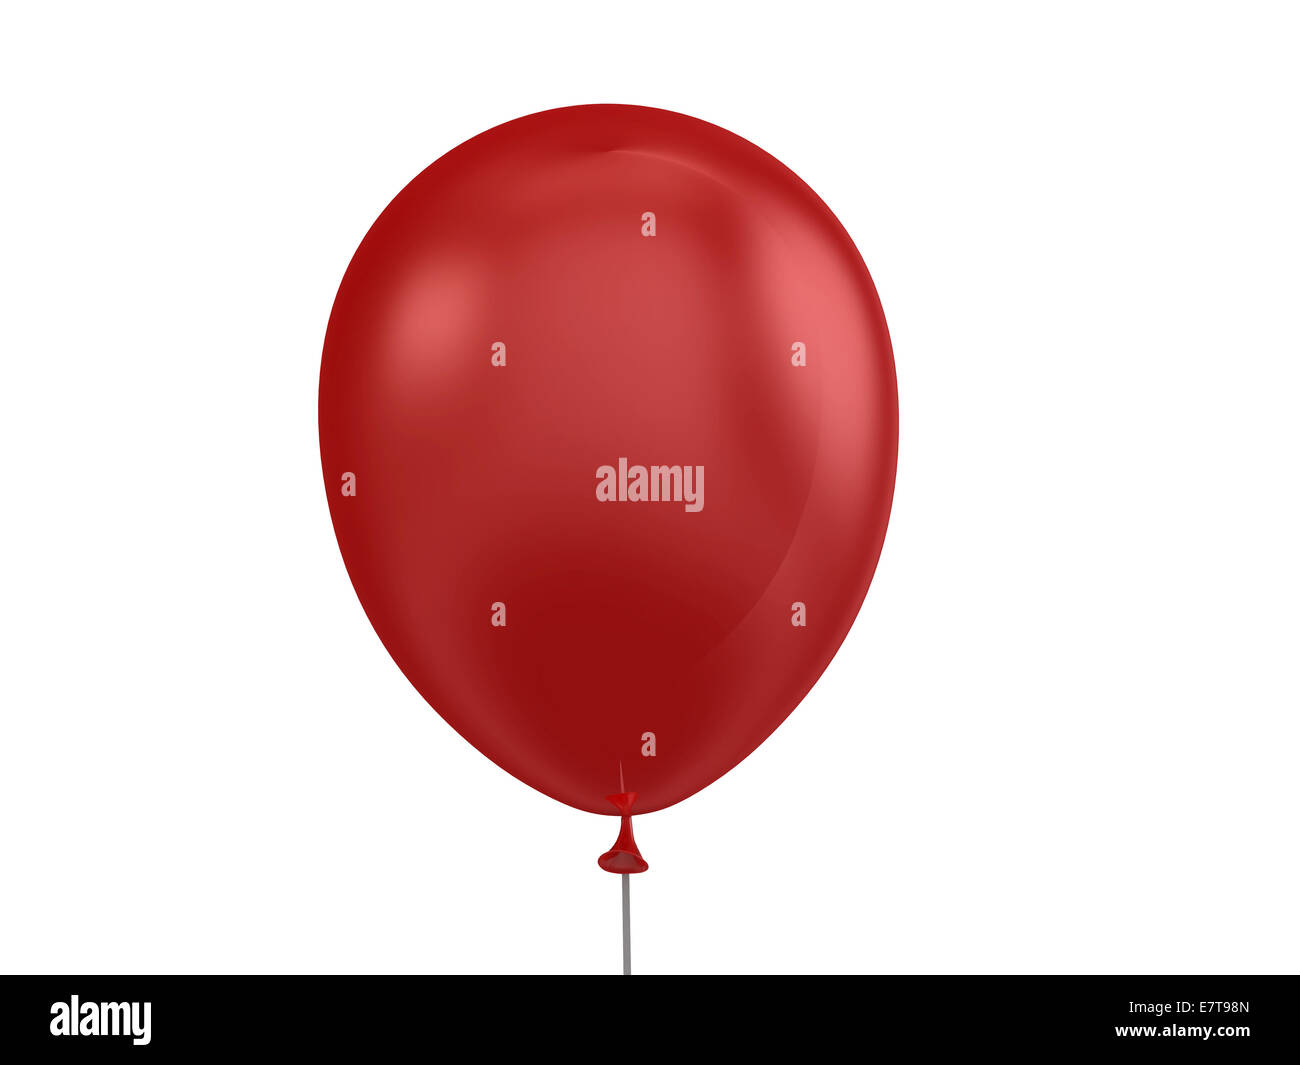 Red single shiny balloon, isolated on white background. Stock Photo